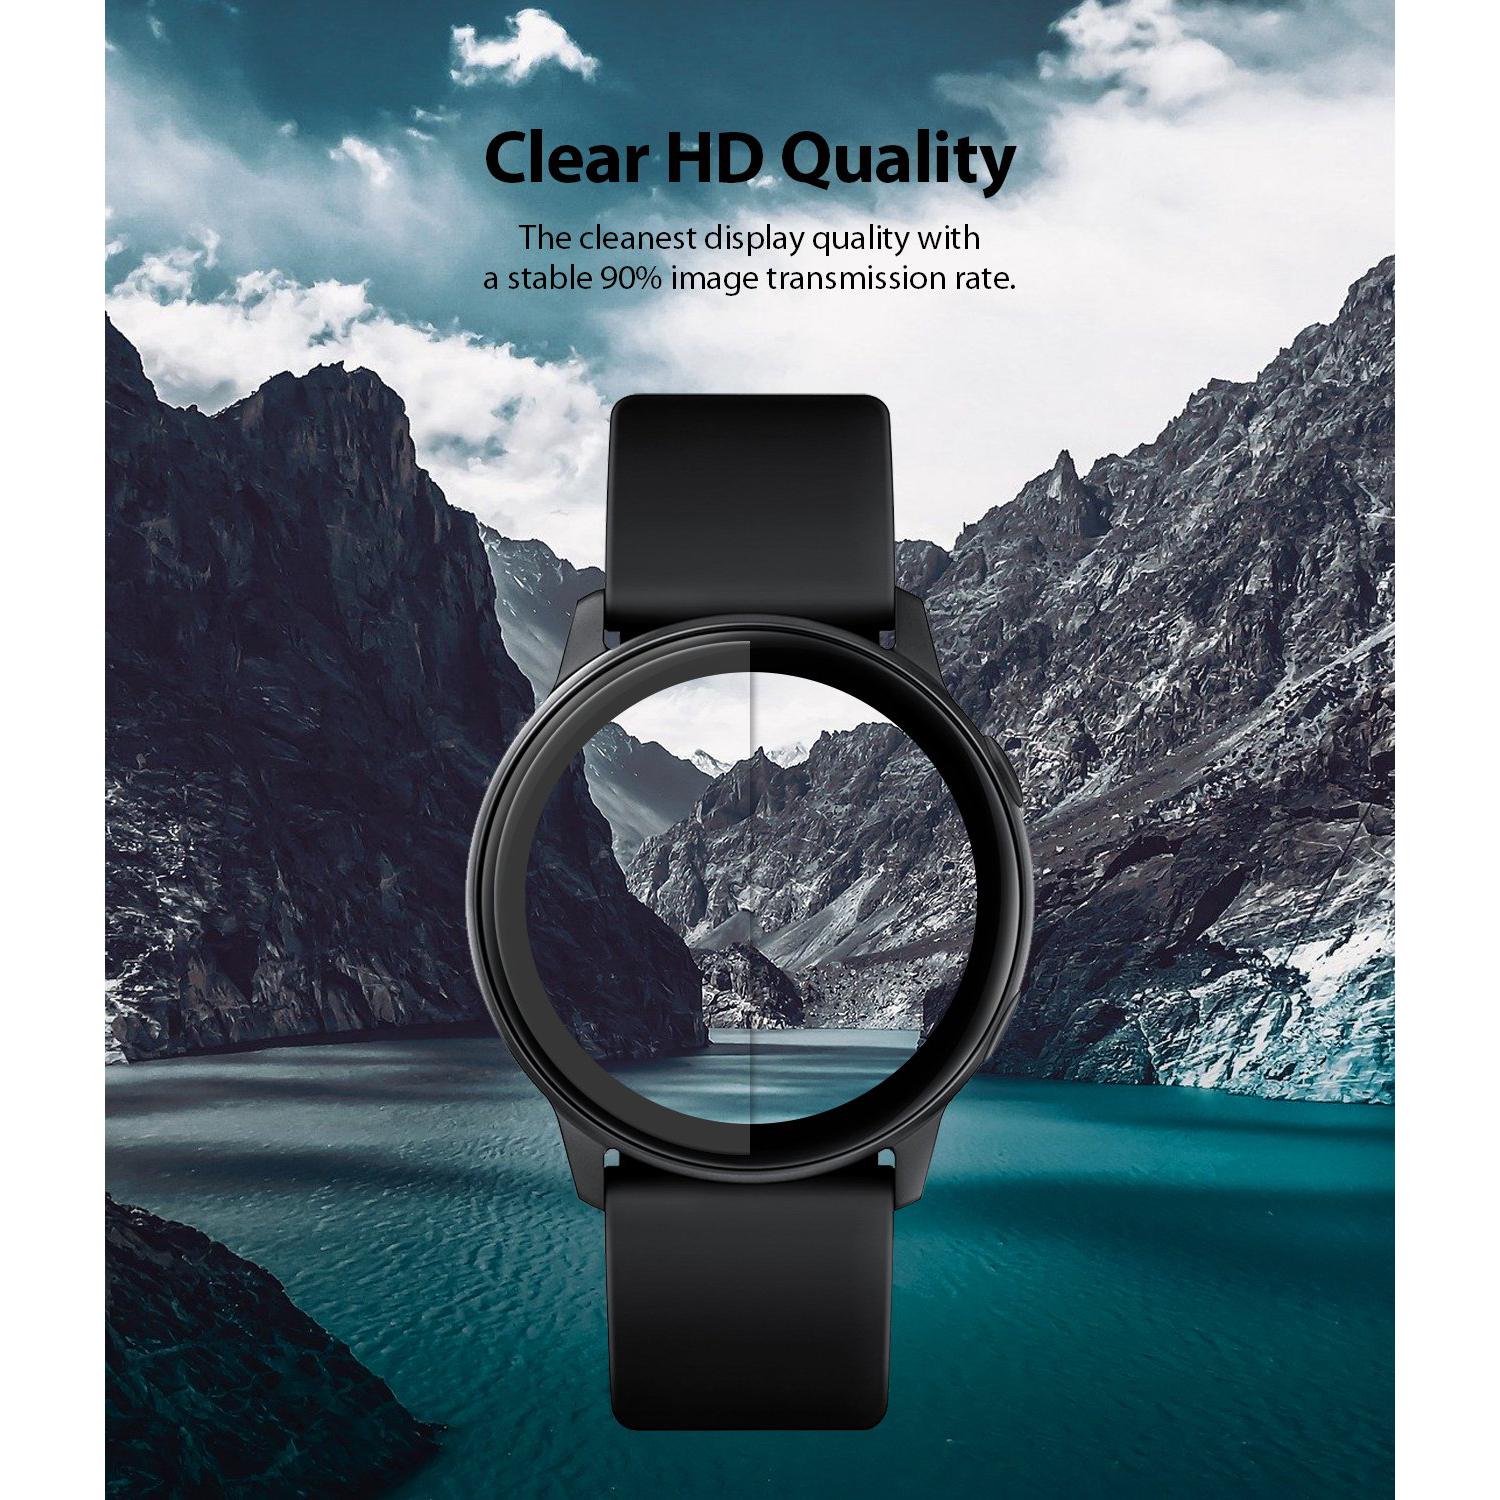 Easy Flex (3-pack) Samsung Galaxy Watch Active 1/2 40mm